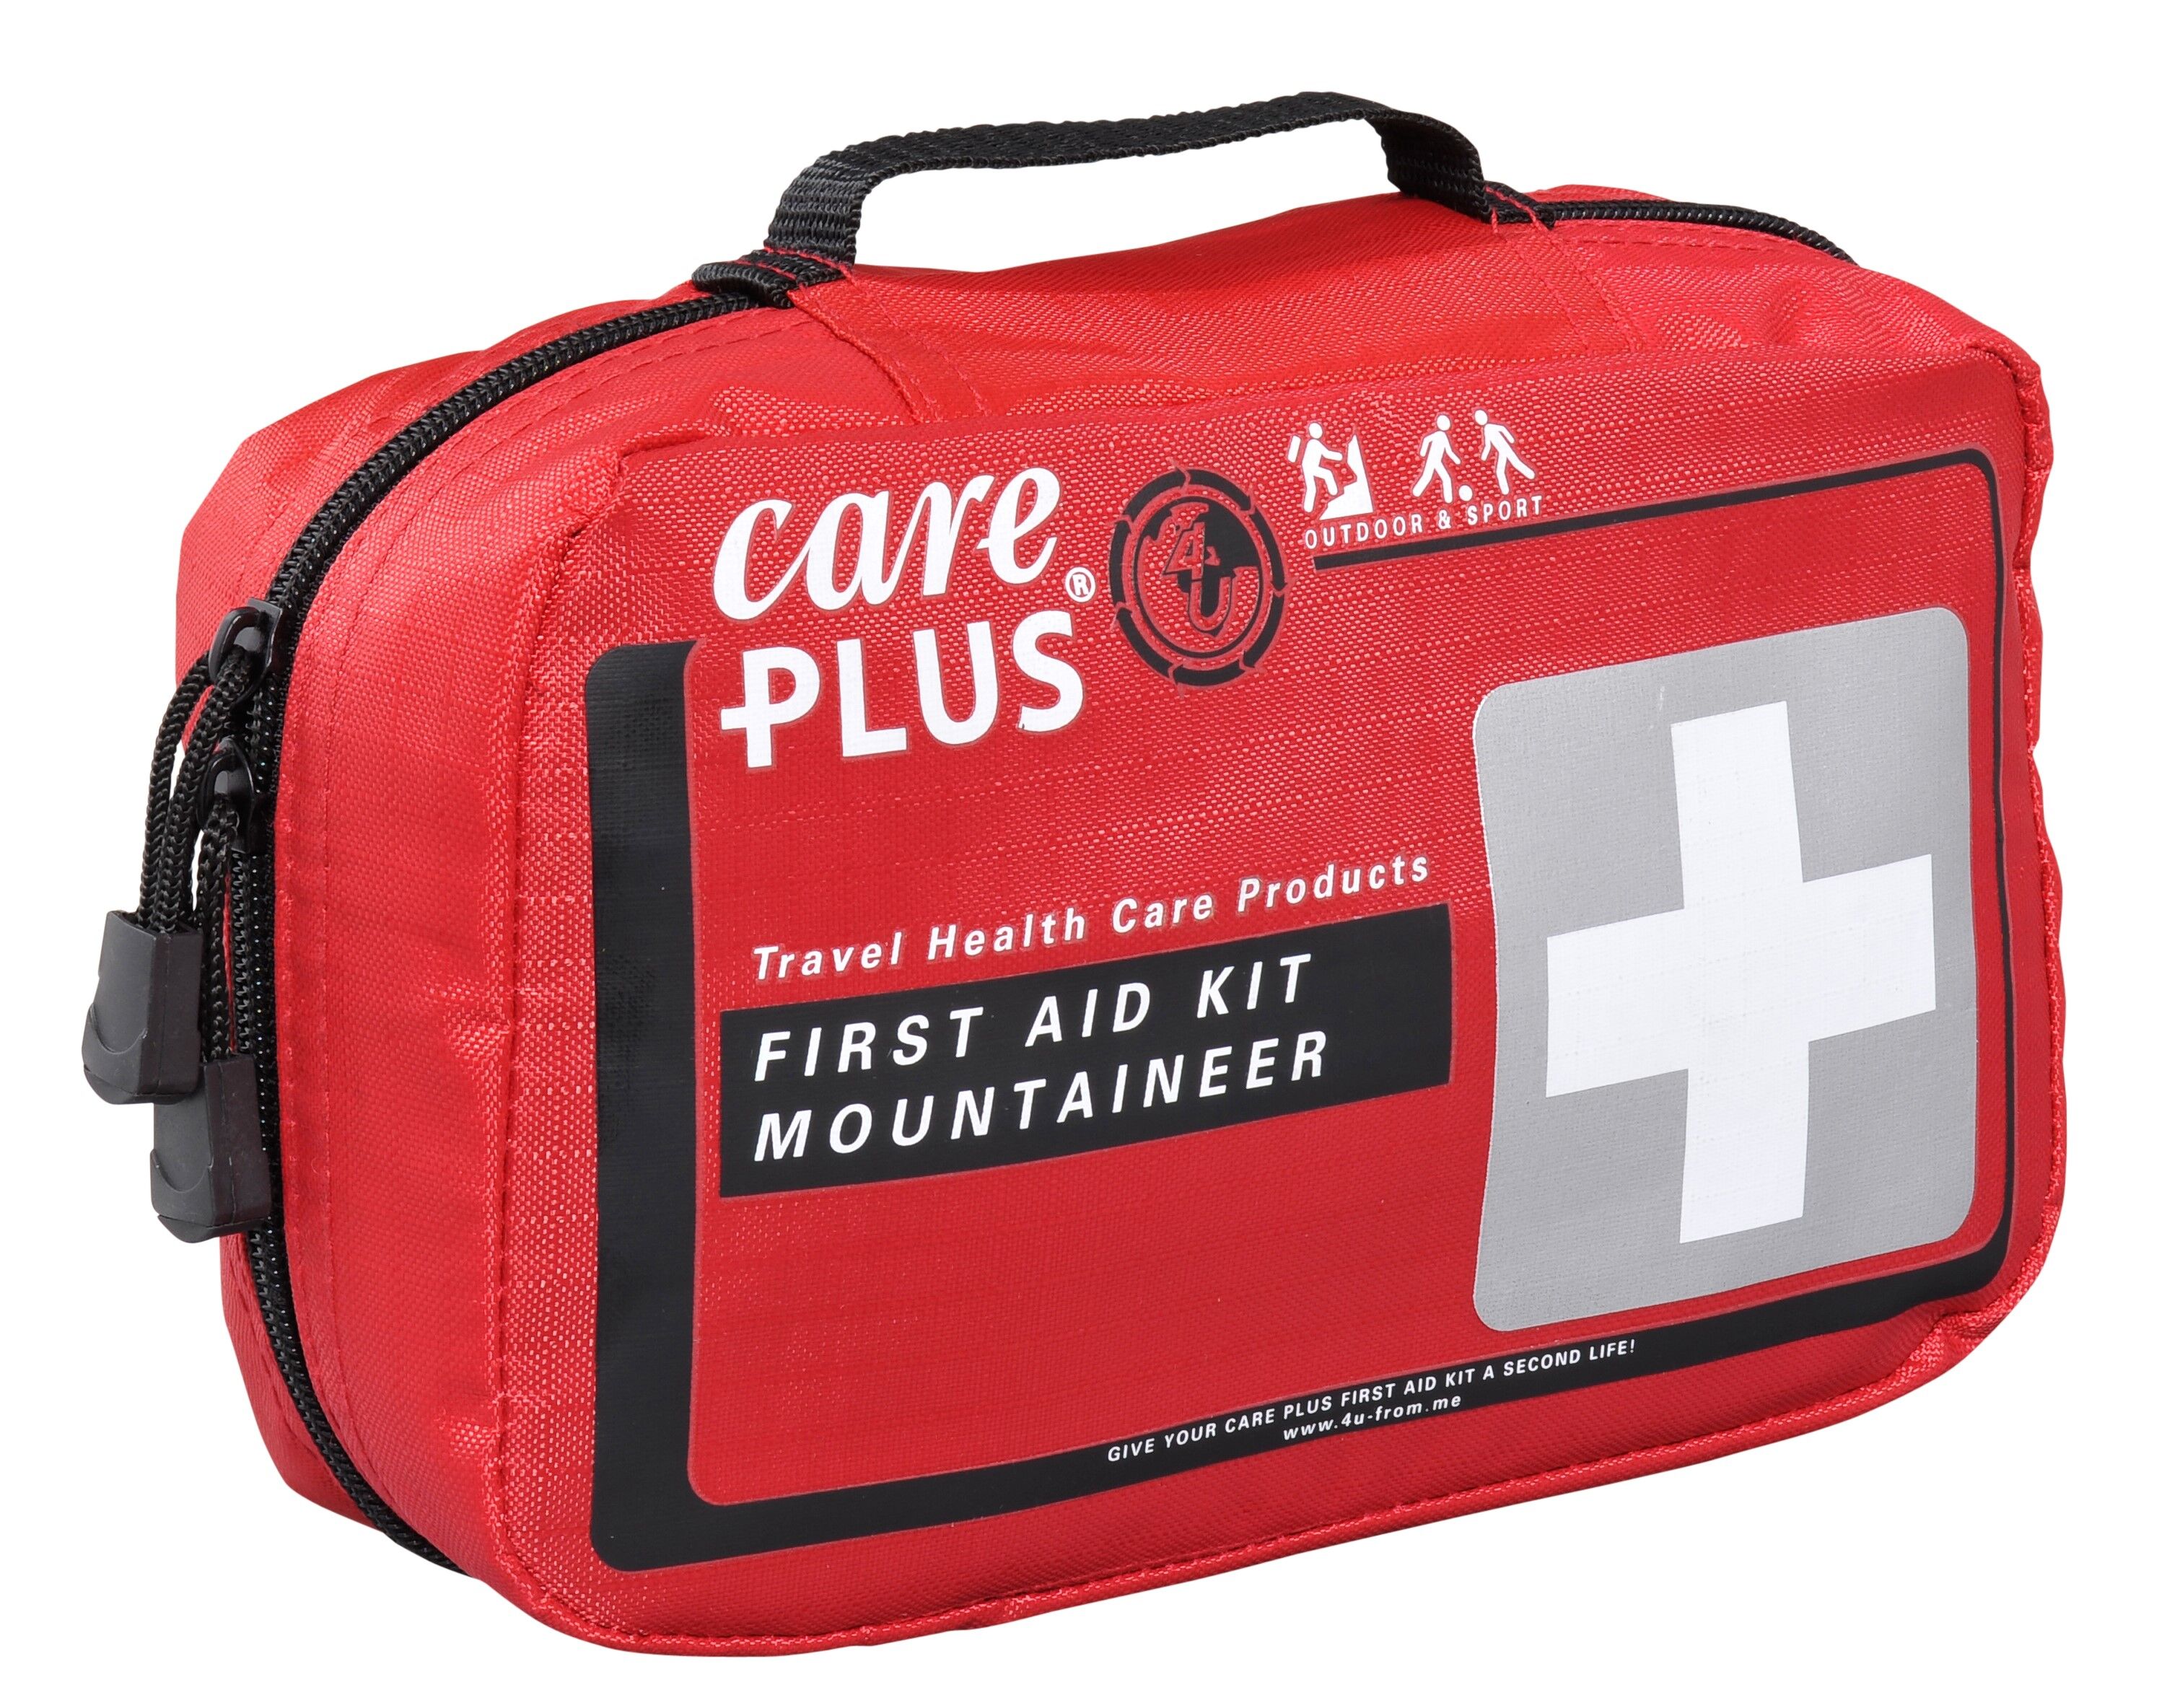 ORTOVOX Erste-Hilfe-Set First Aid Mini Waterproof orange